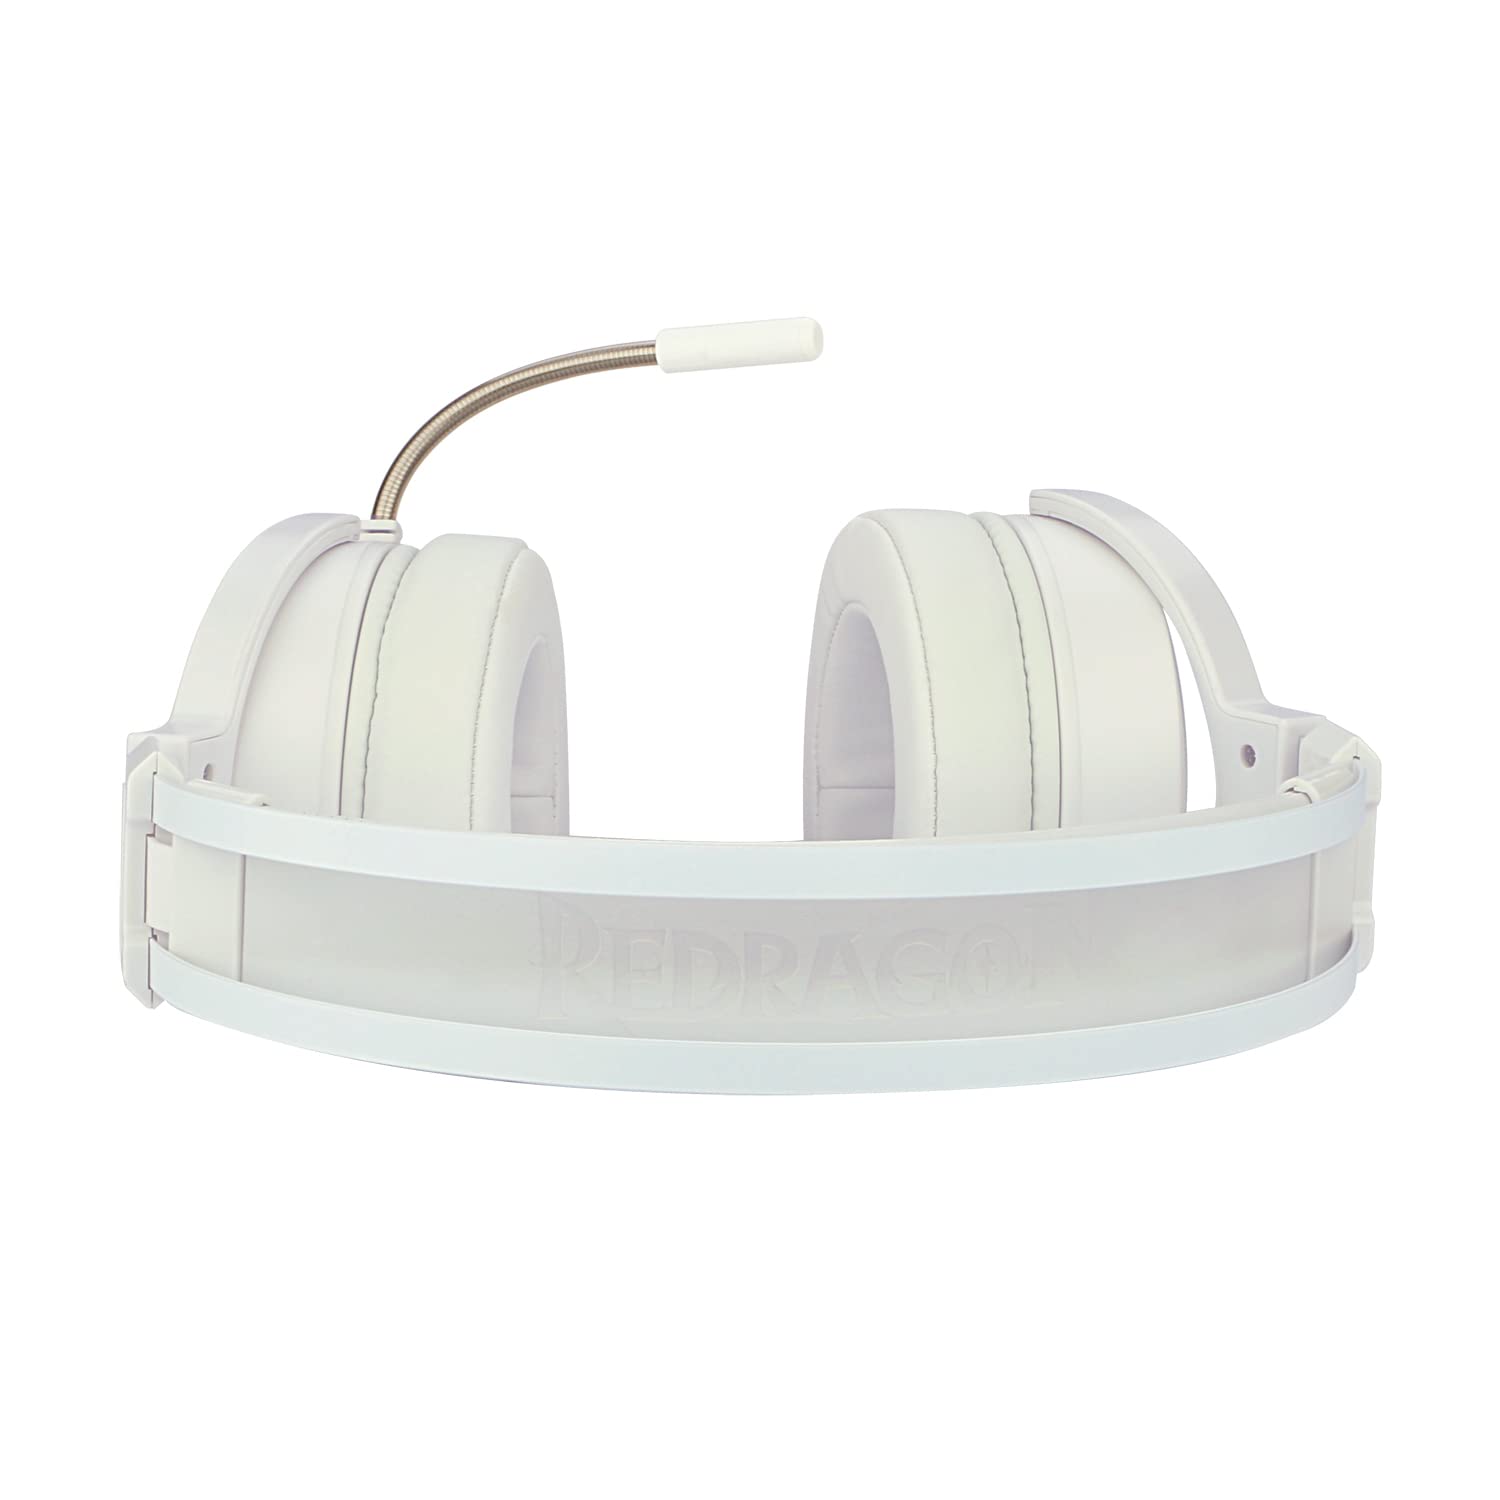 Redragon-Lamia2-Headset